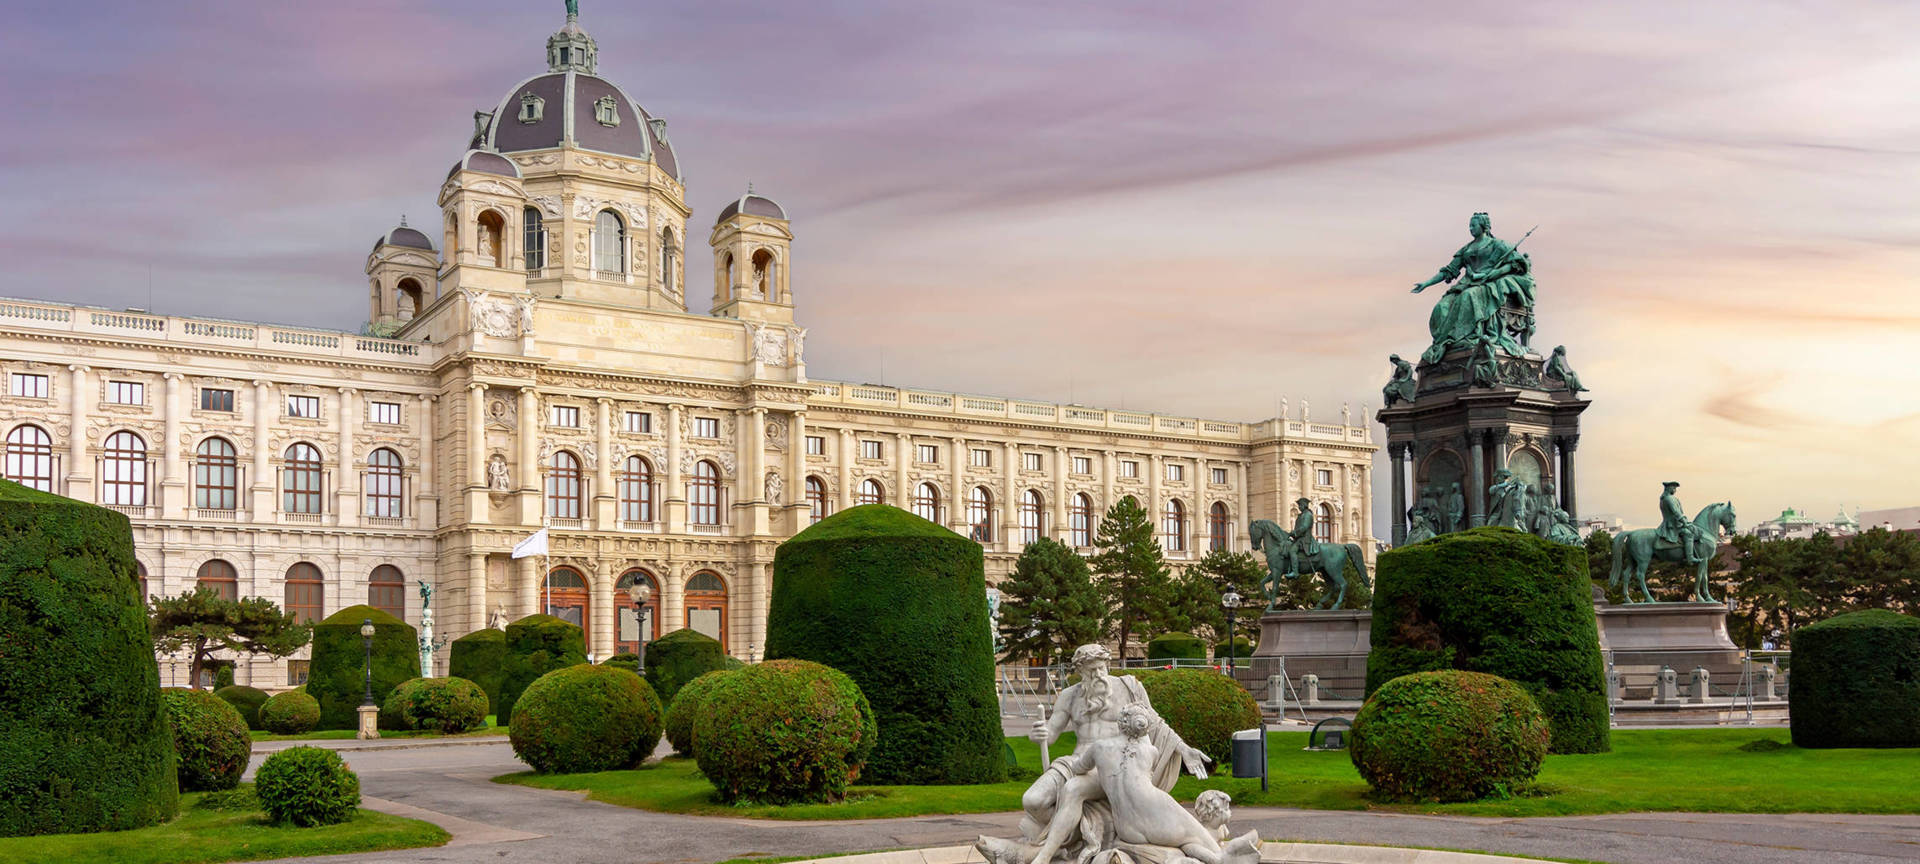 Museen in Wien - H-Hotels.com